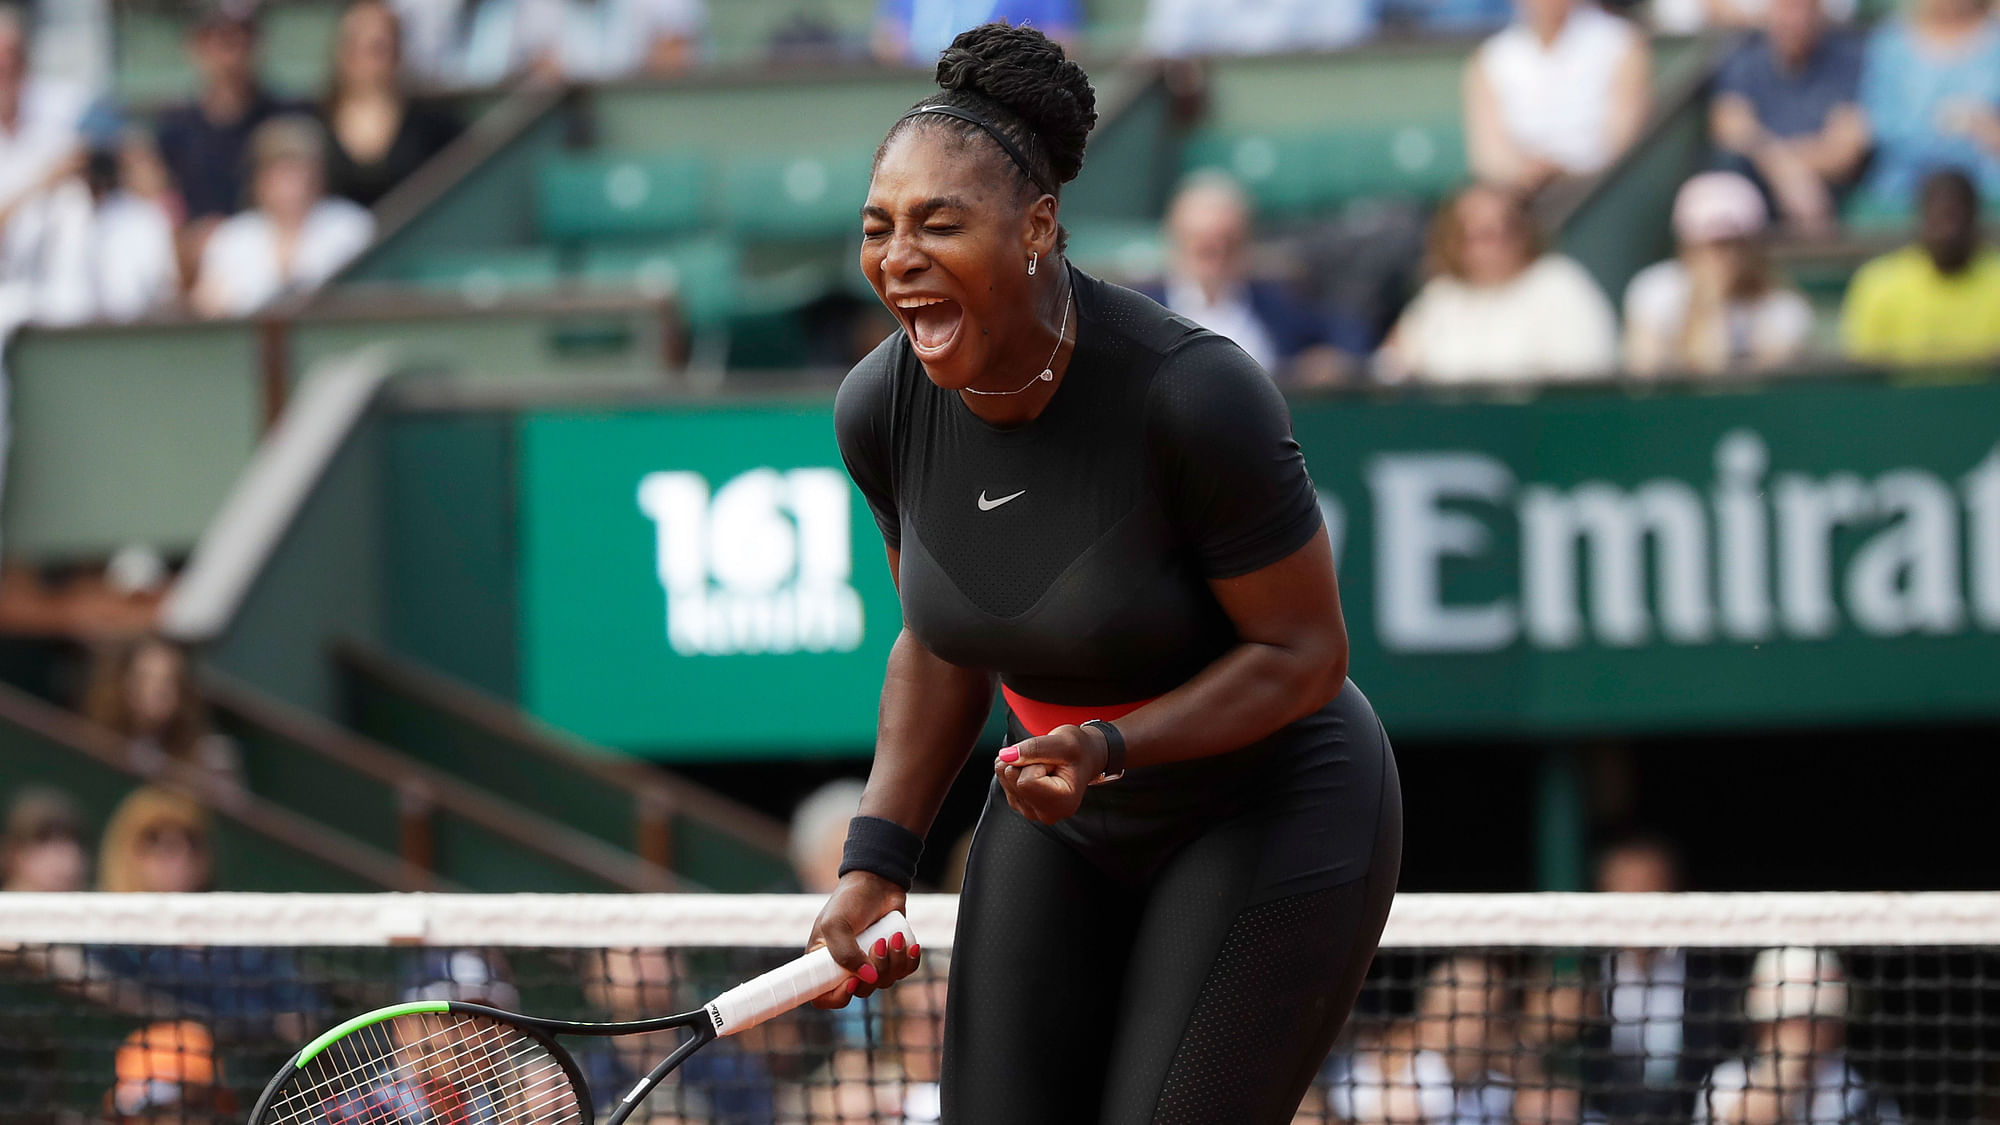 Serena Williams of the US celebrates winning her first round match of the French Open tennis tournament against Krystina Pliskova.